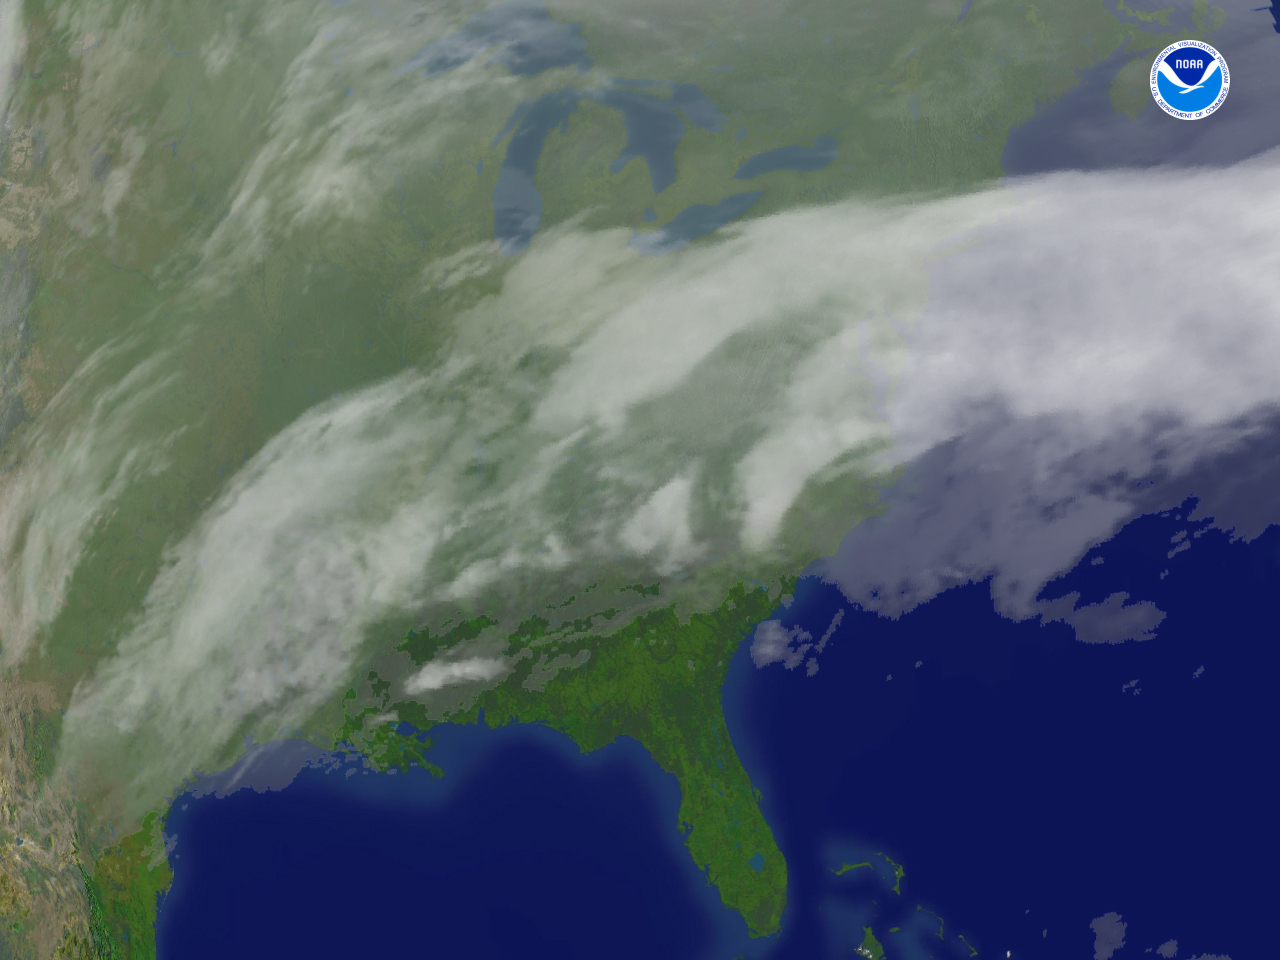 Northeastern United States regional imagery, 2009.01.06 at 1200Z. Centerpoint Latitude: 36:42:44N Longitude: 85:27:50W.
